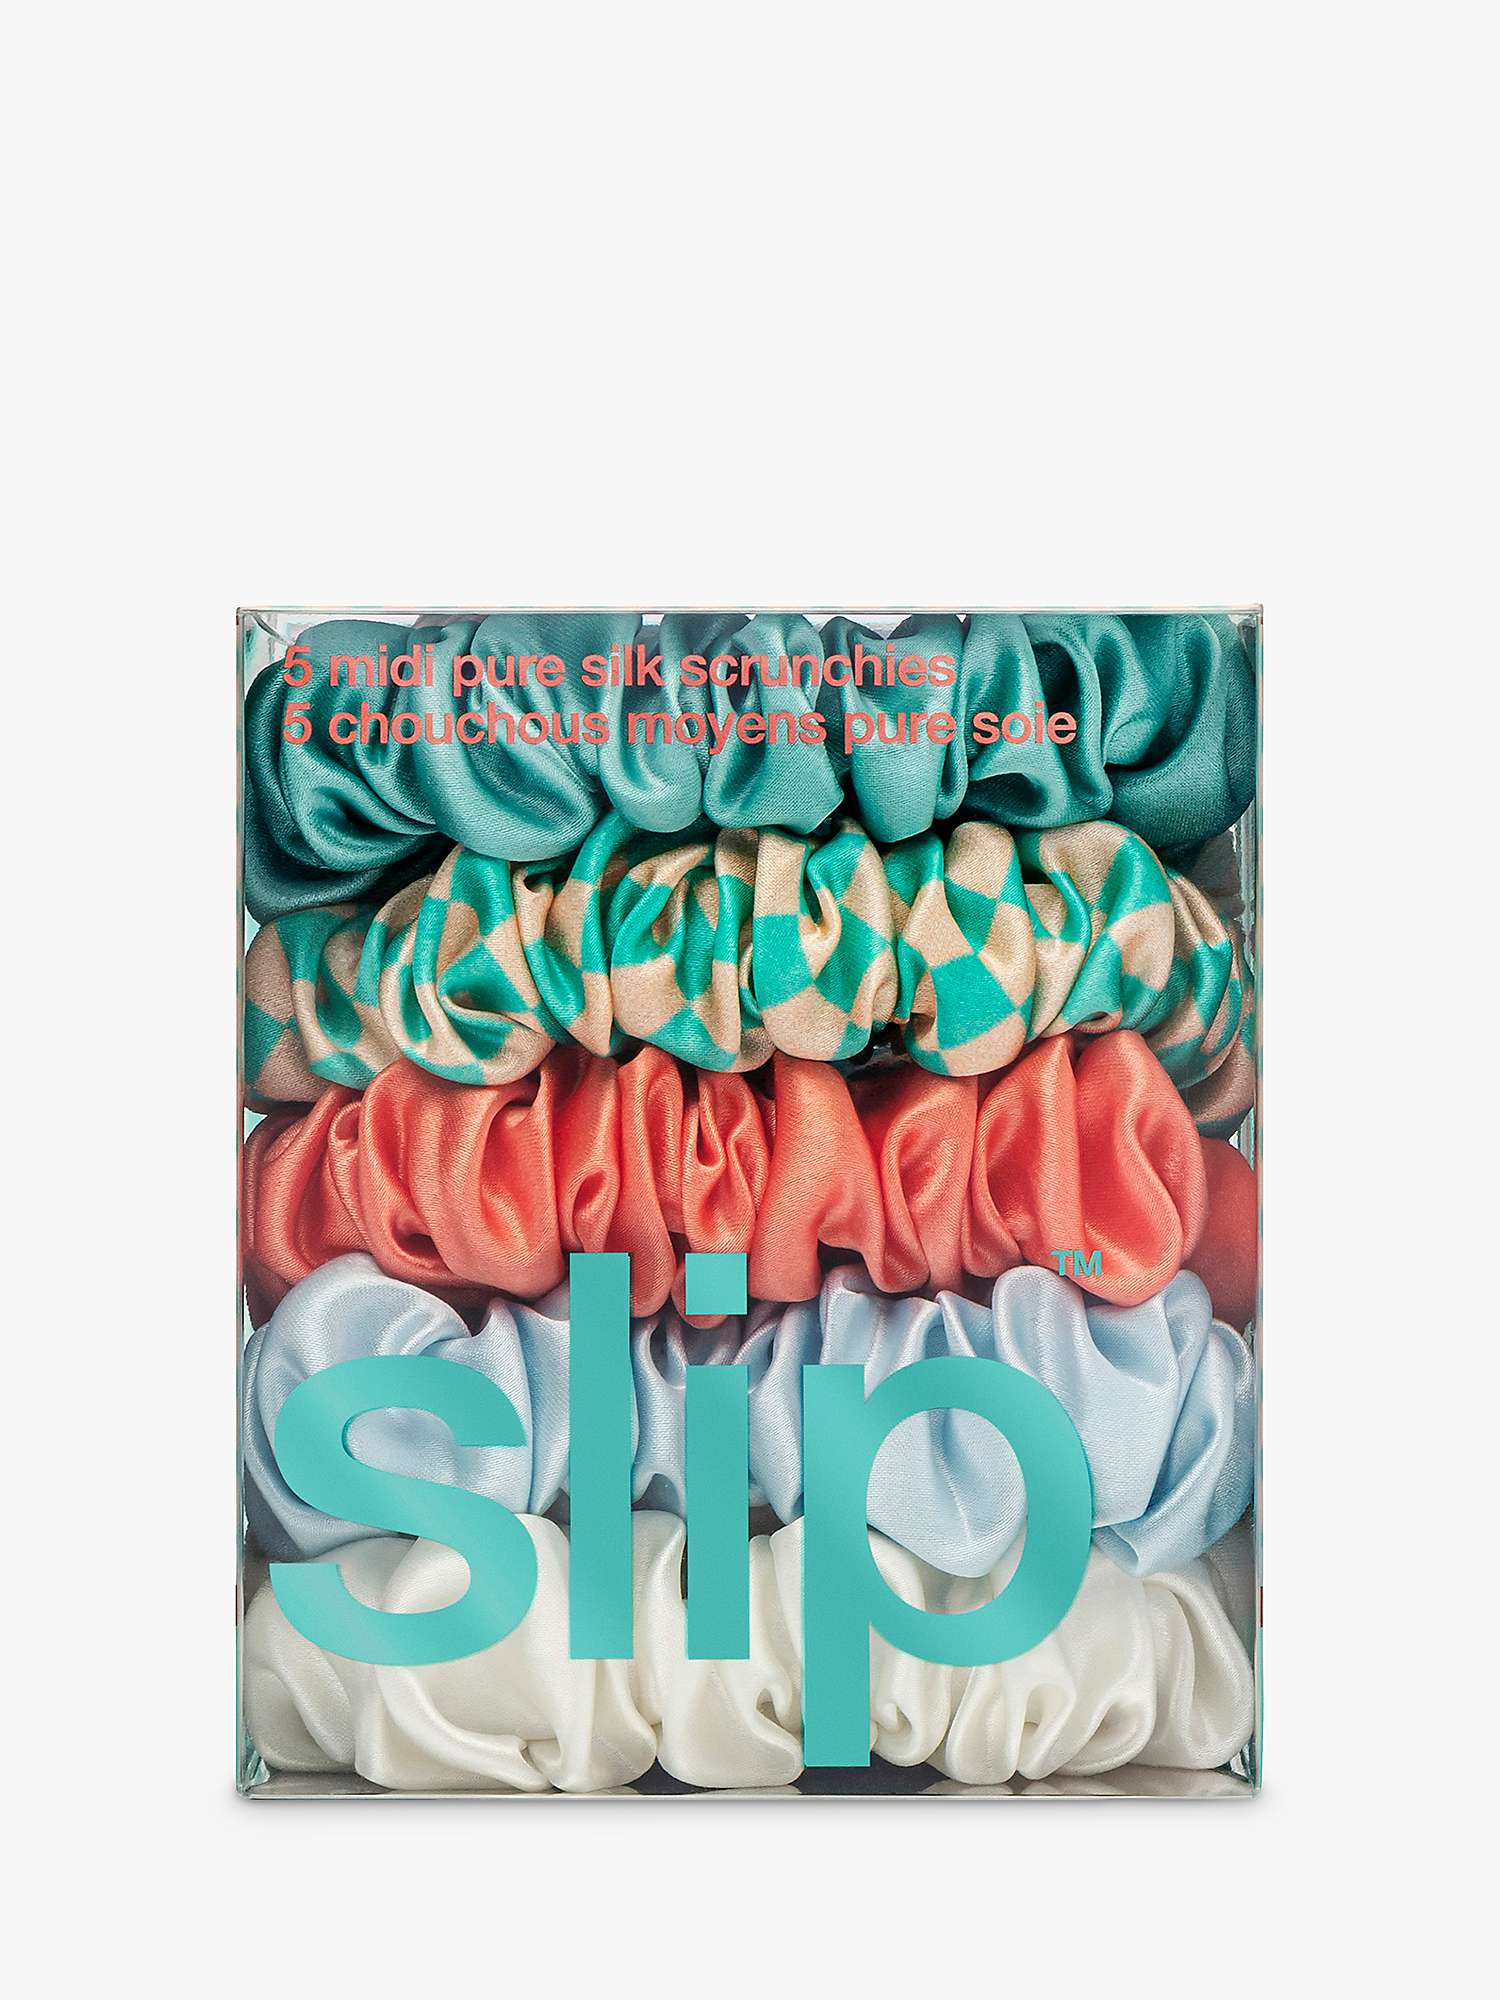 Buy Slip® Midi Silk Scrunchies, Pack of 5, Seashell Online at johnlewis.com